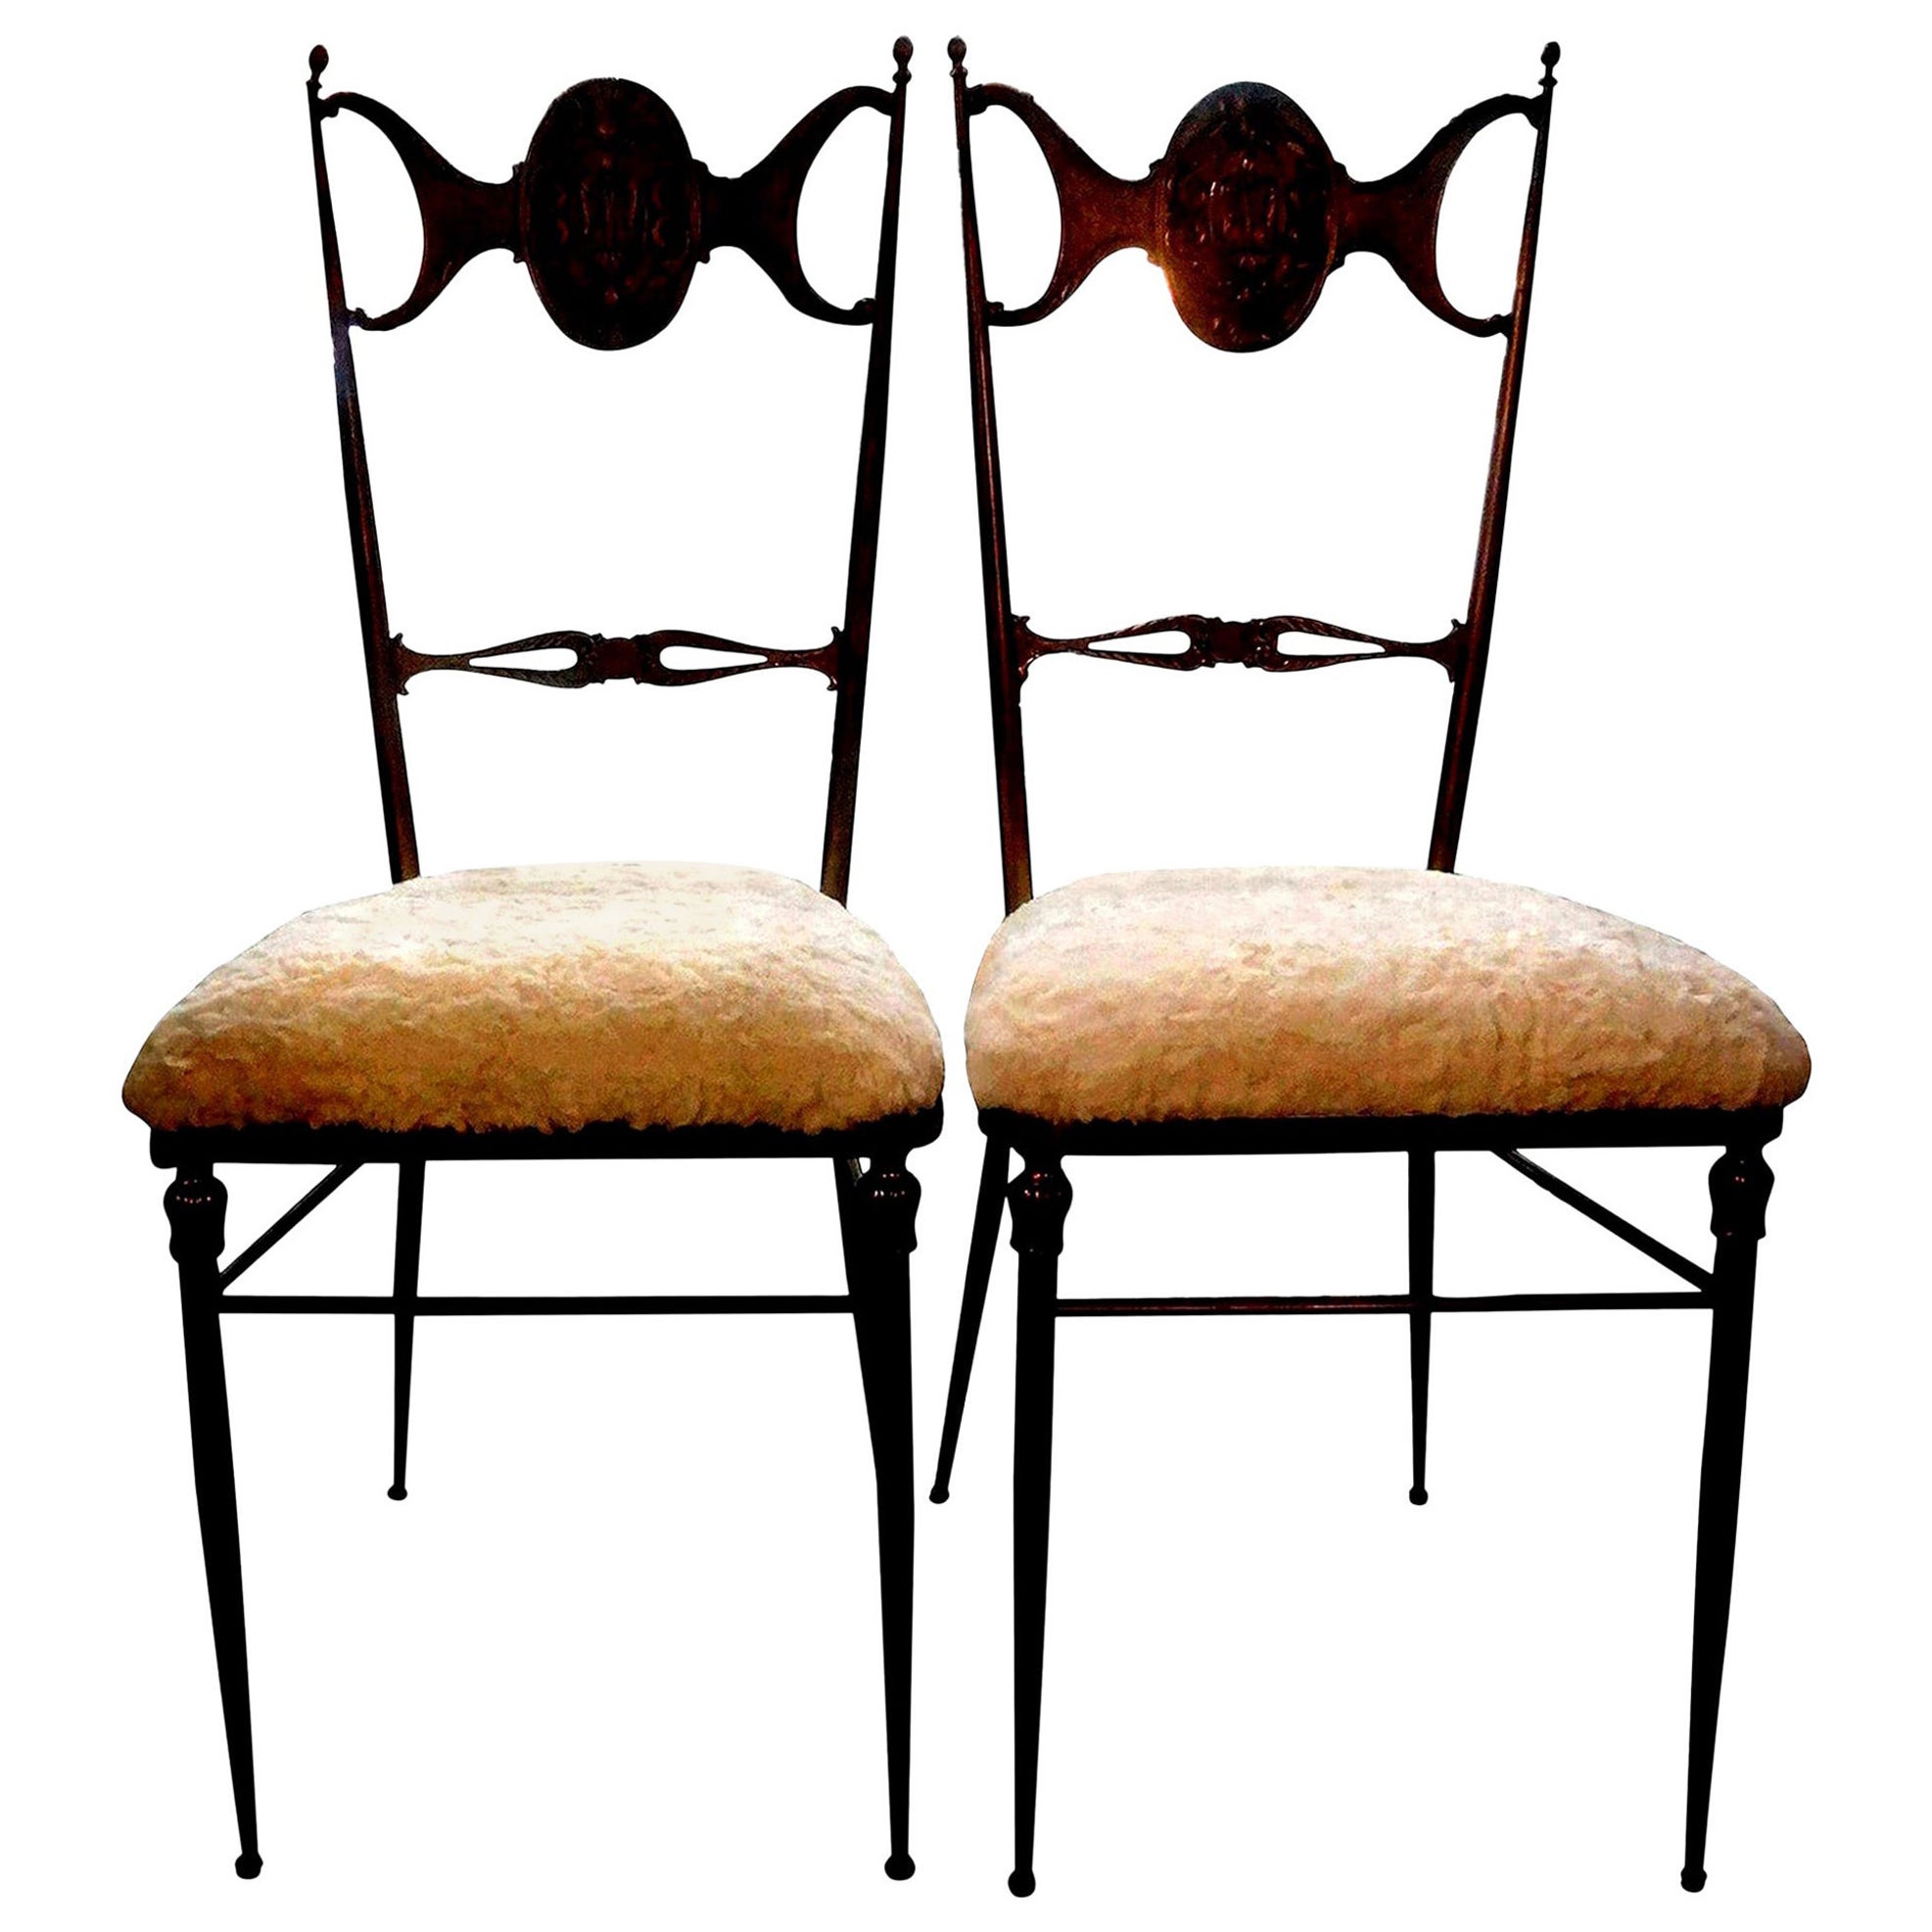 Pair of Italian Brass Chiavari Chairs For Sale